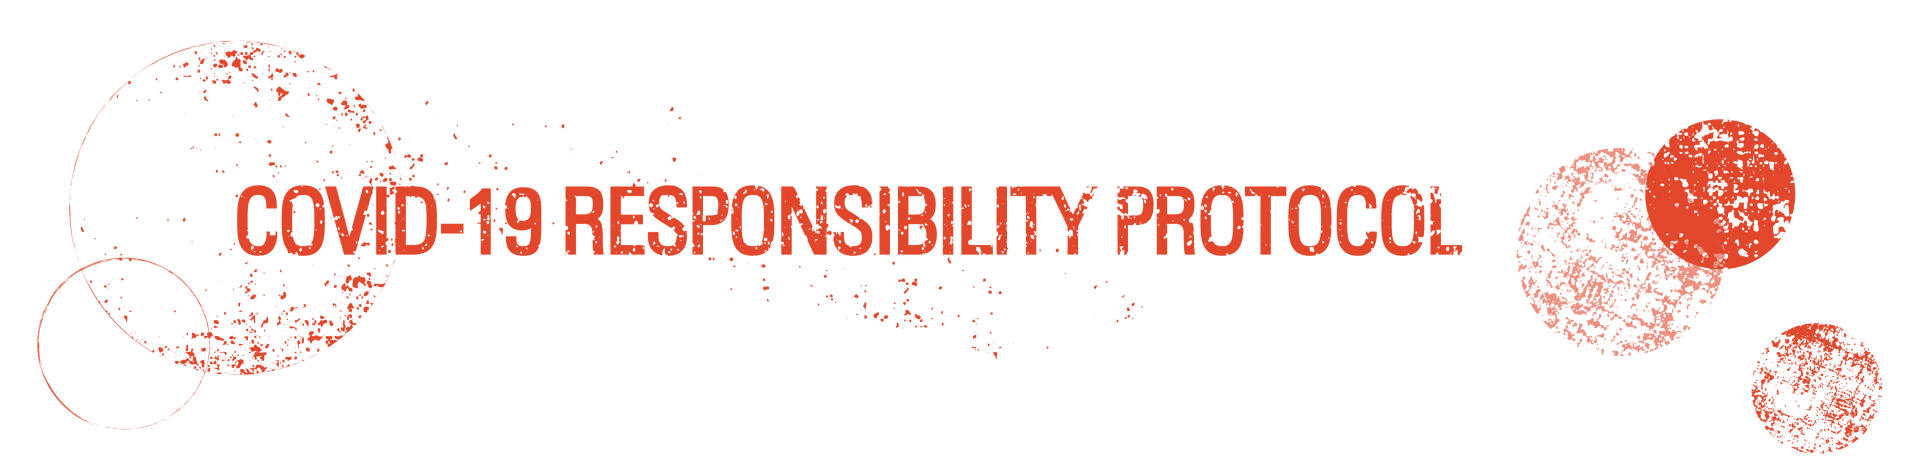 COVID-19 responsibility protocol